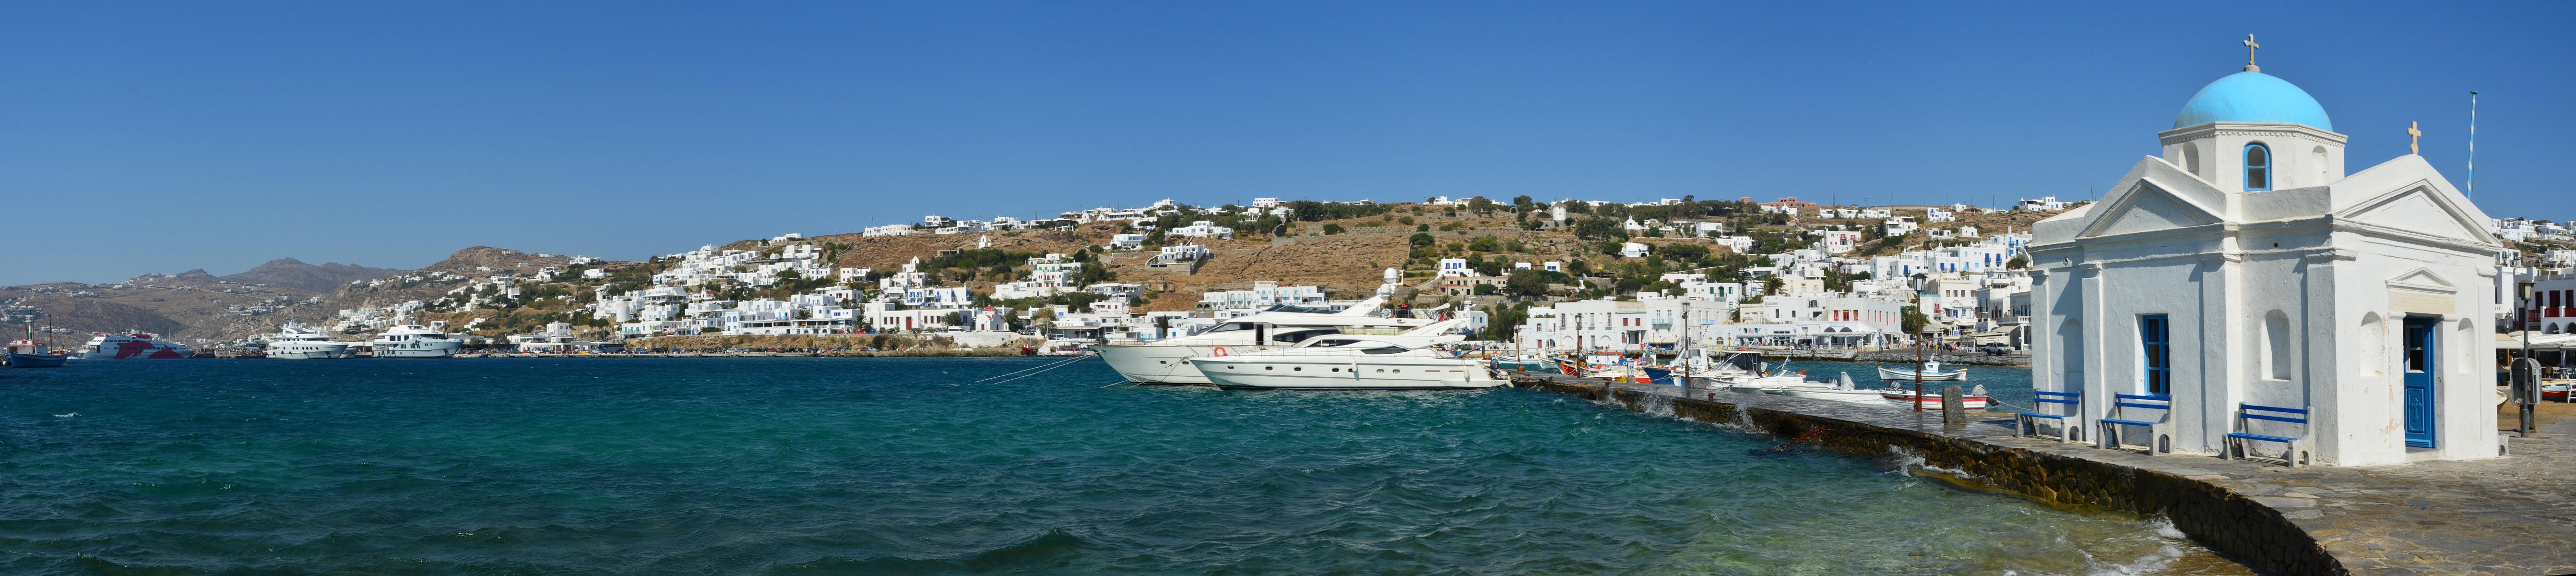 Port of Chora - Mykonos - Greece.jpg